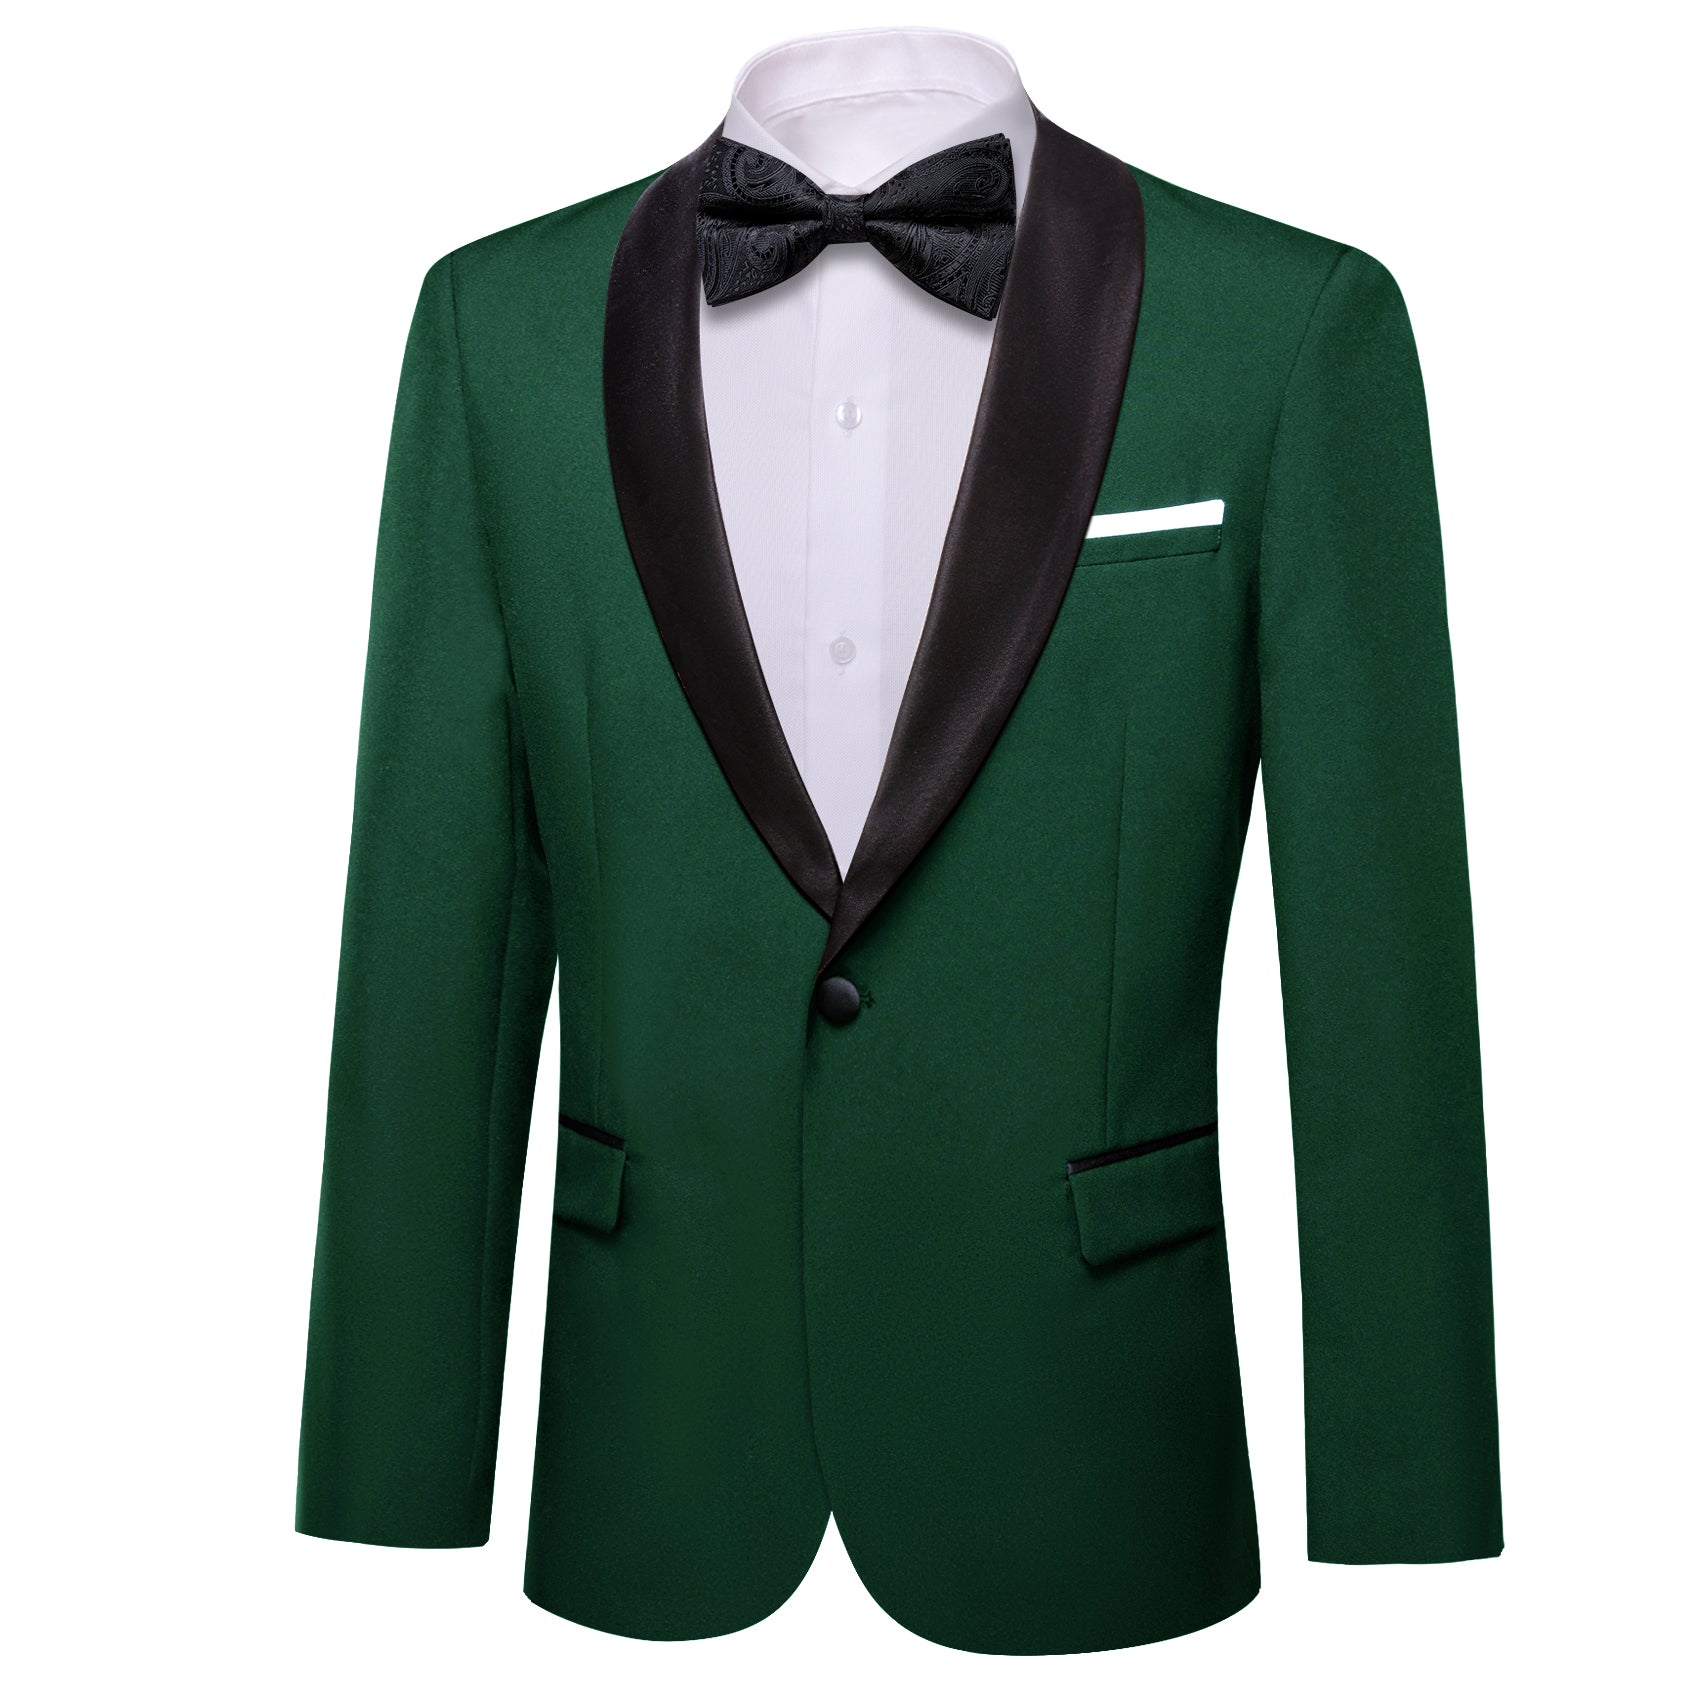 Men's Dress Green Solid Suit Jacket Slim One Button Stylish Blazer